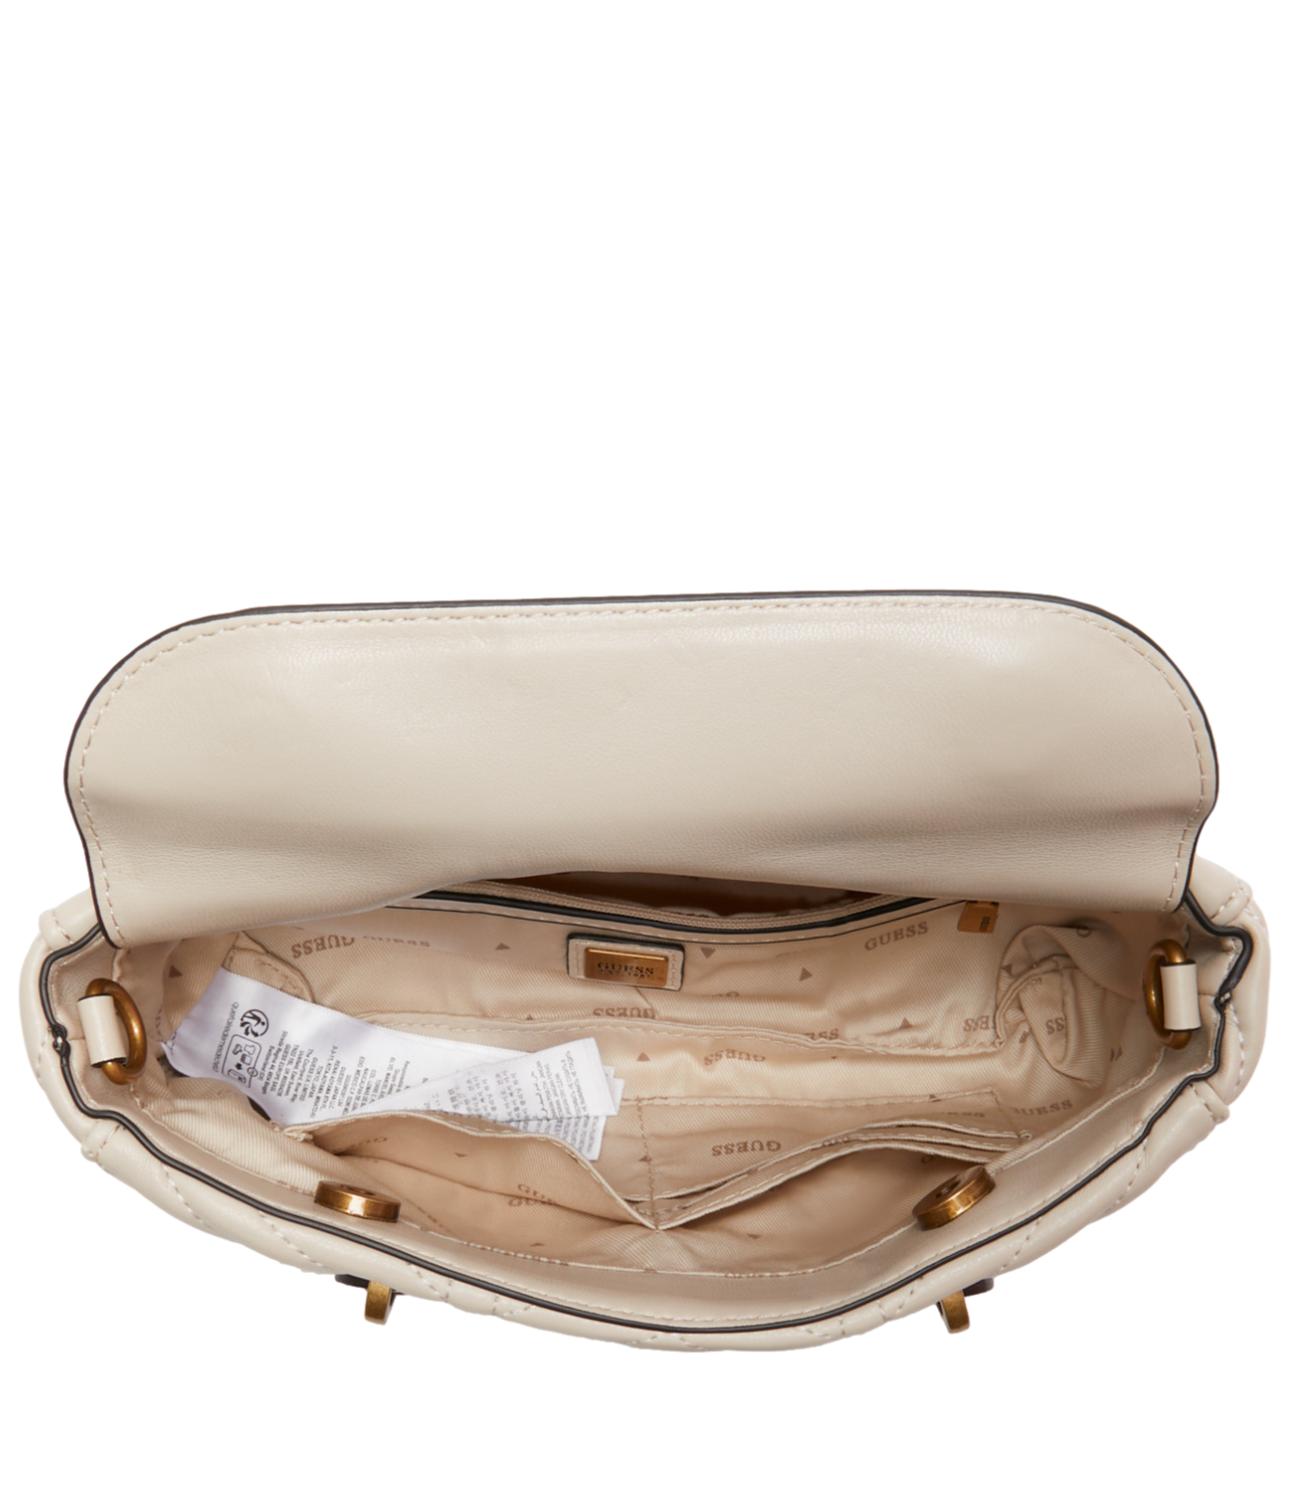 Lovide mini satchel stone women's bag